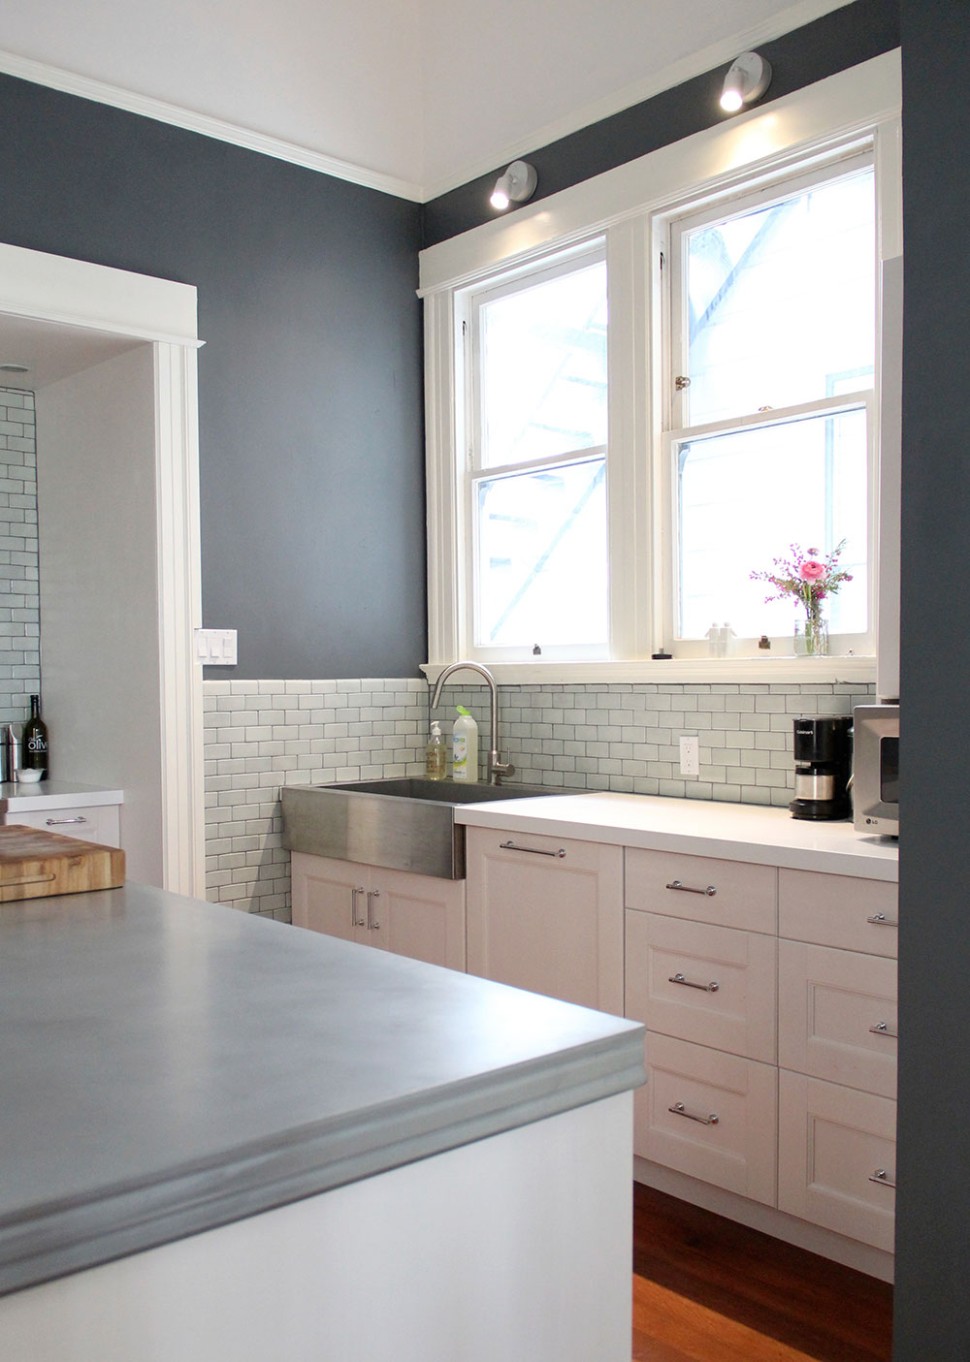 3 Gorgeous Gray Kitchen Ideas - How to Use Gray in Kitchens  - light grey kitchen walls